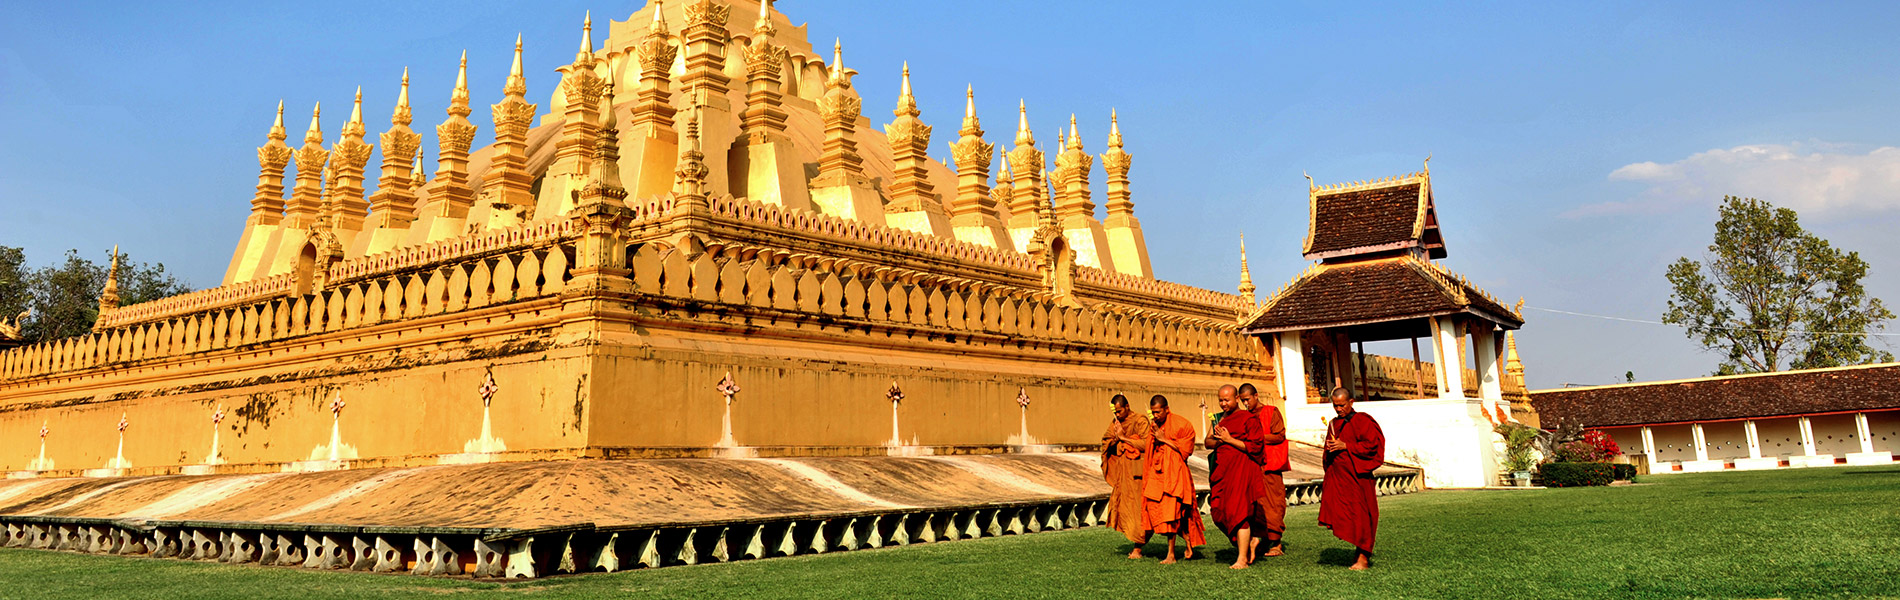 Golden Wat That Luang, Laos